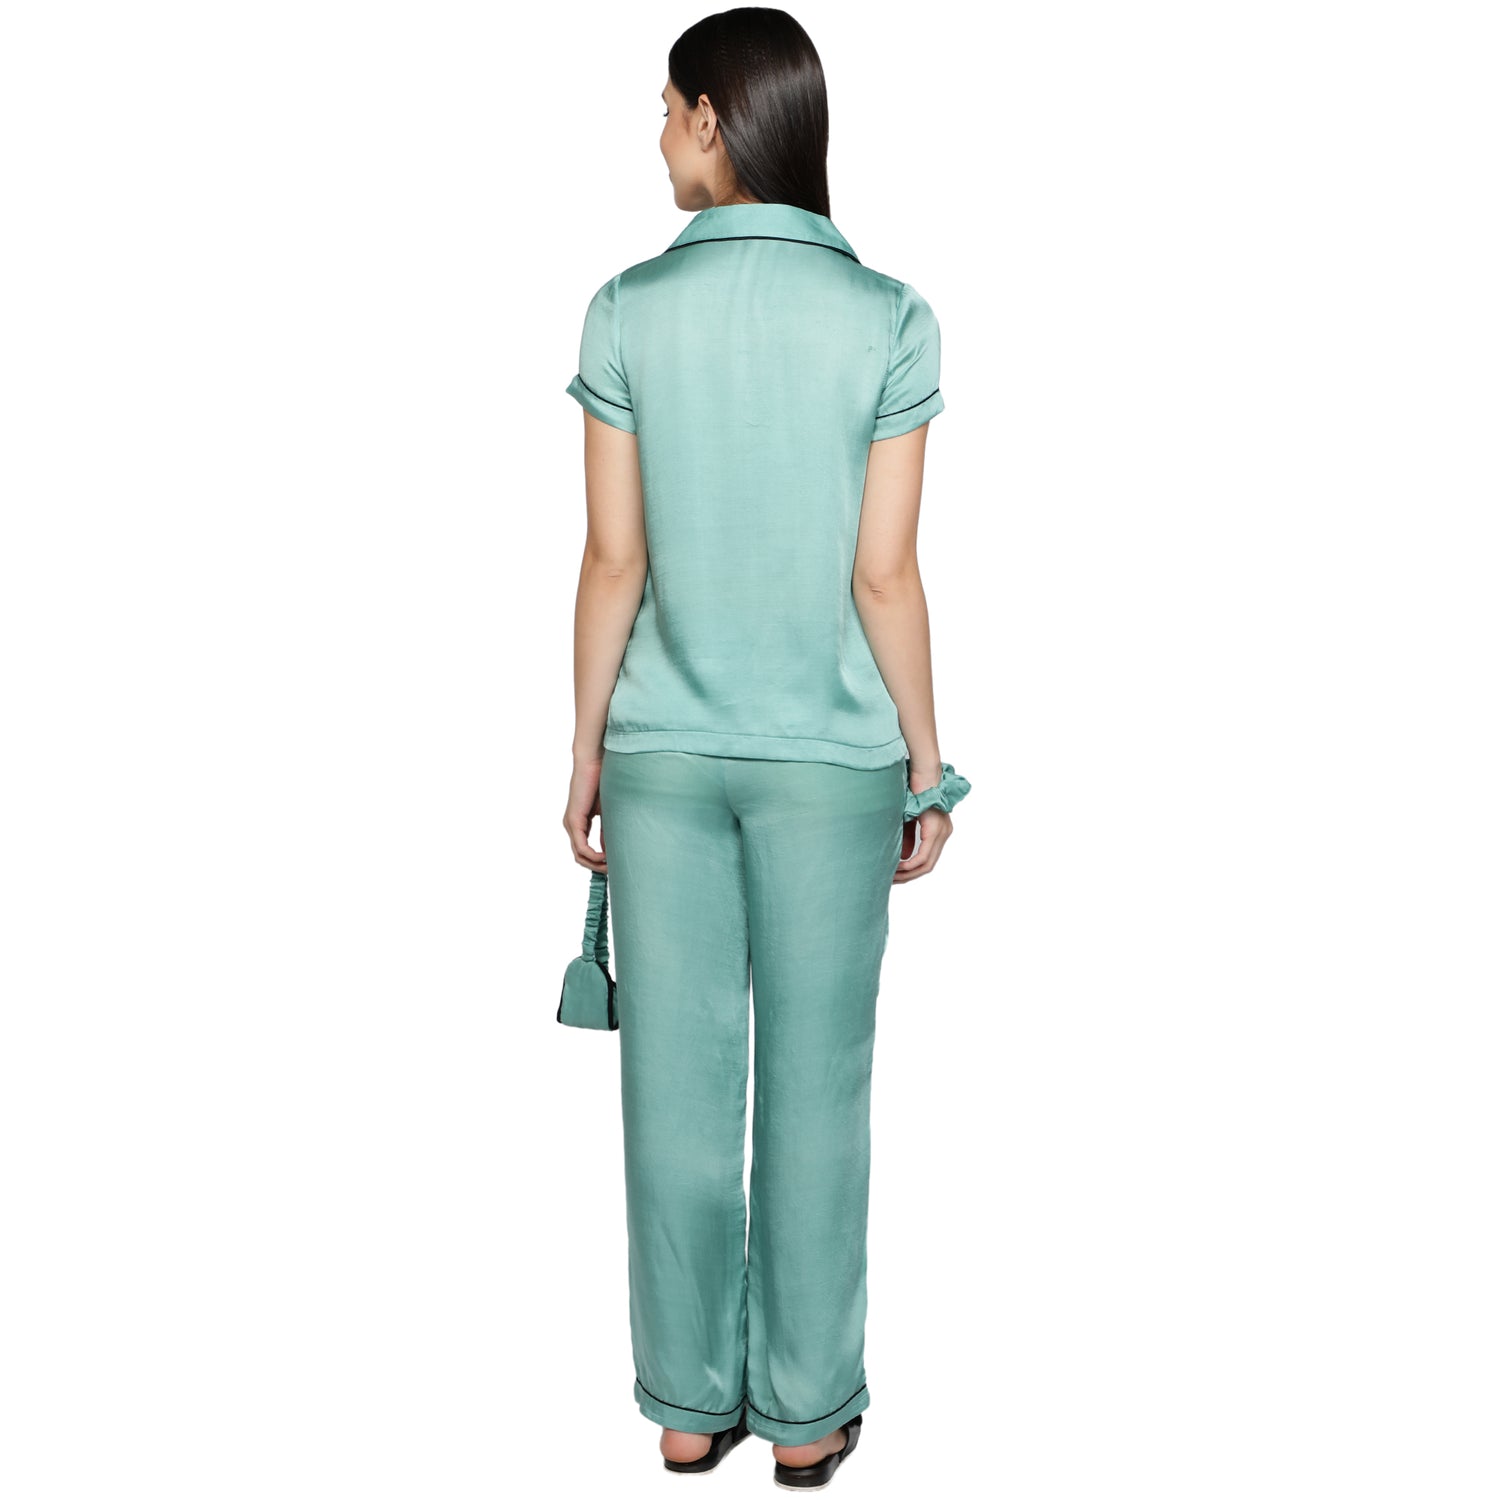 SLAY. Women's Mint color Half Sleeve Button Up Shirt & Pyjama Coord Set with matching Eye mask & Ruffle-clothing-to-slay.myshopify.com-Nightwear Dress